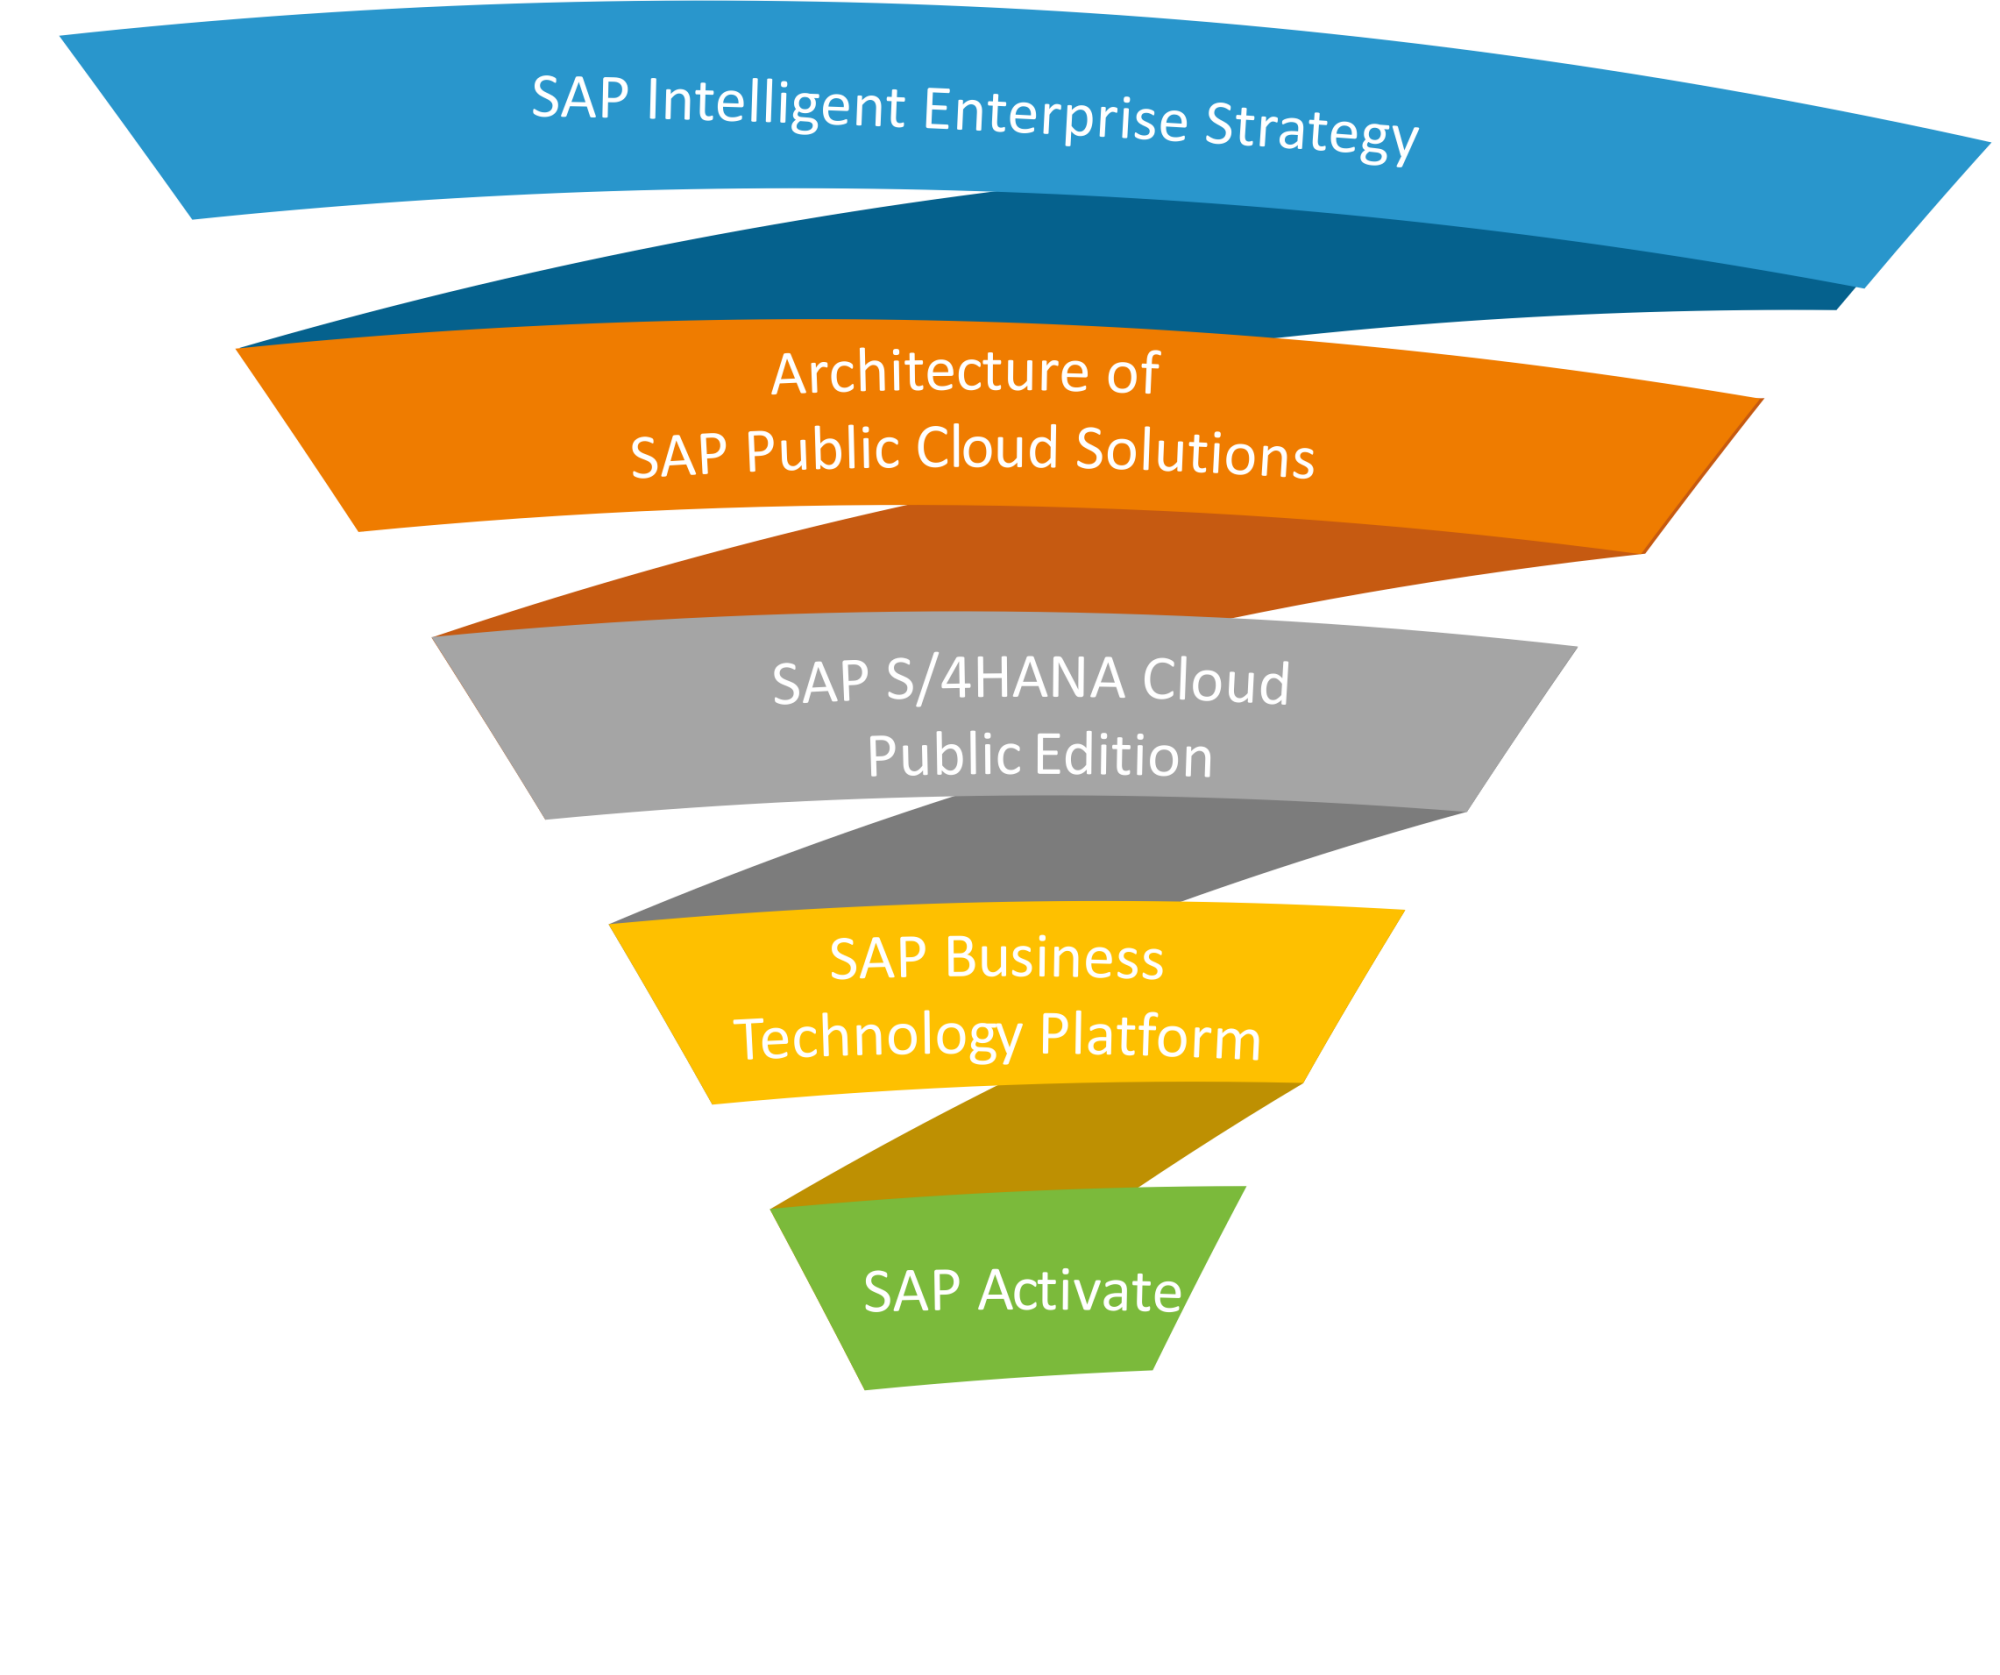 Scheer concepts approach SAP S/4HANA Cloud, Public Edition